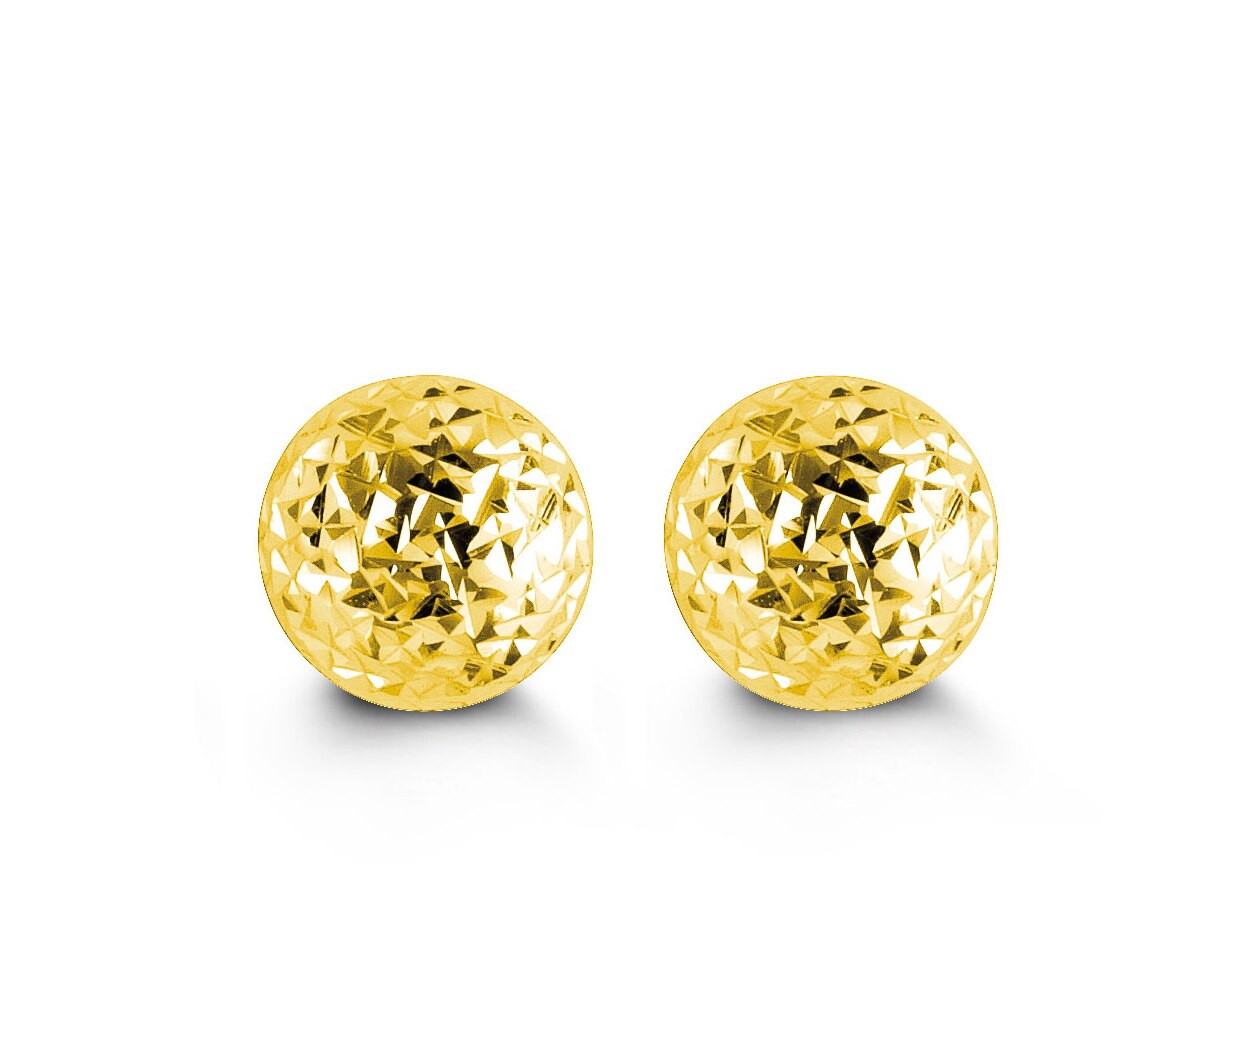 10KT Yellow Gold Textured Ball Style Earrings 7mm Diameter